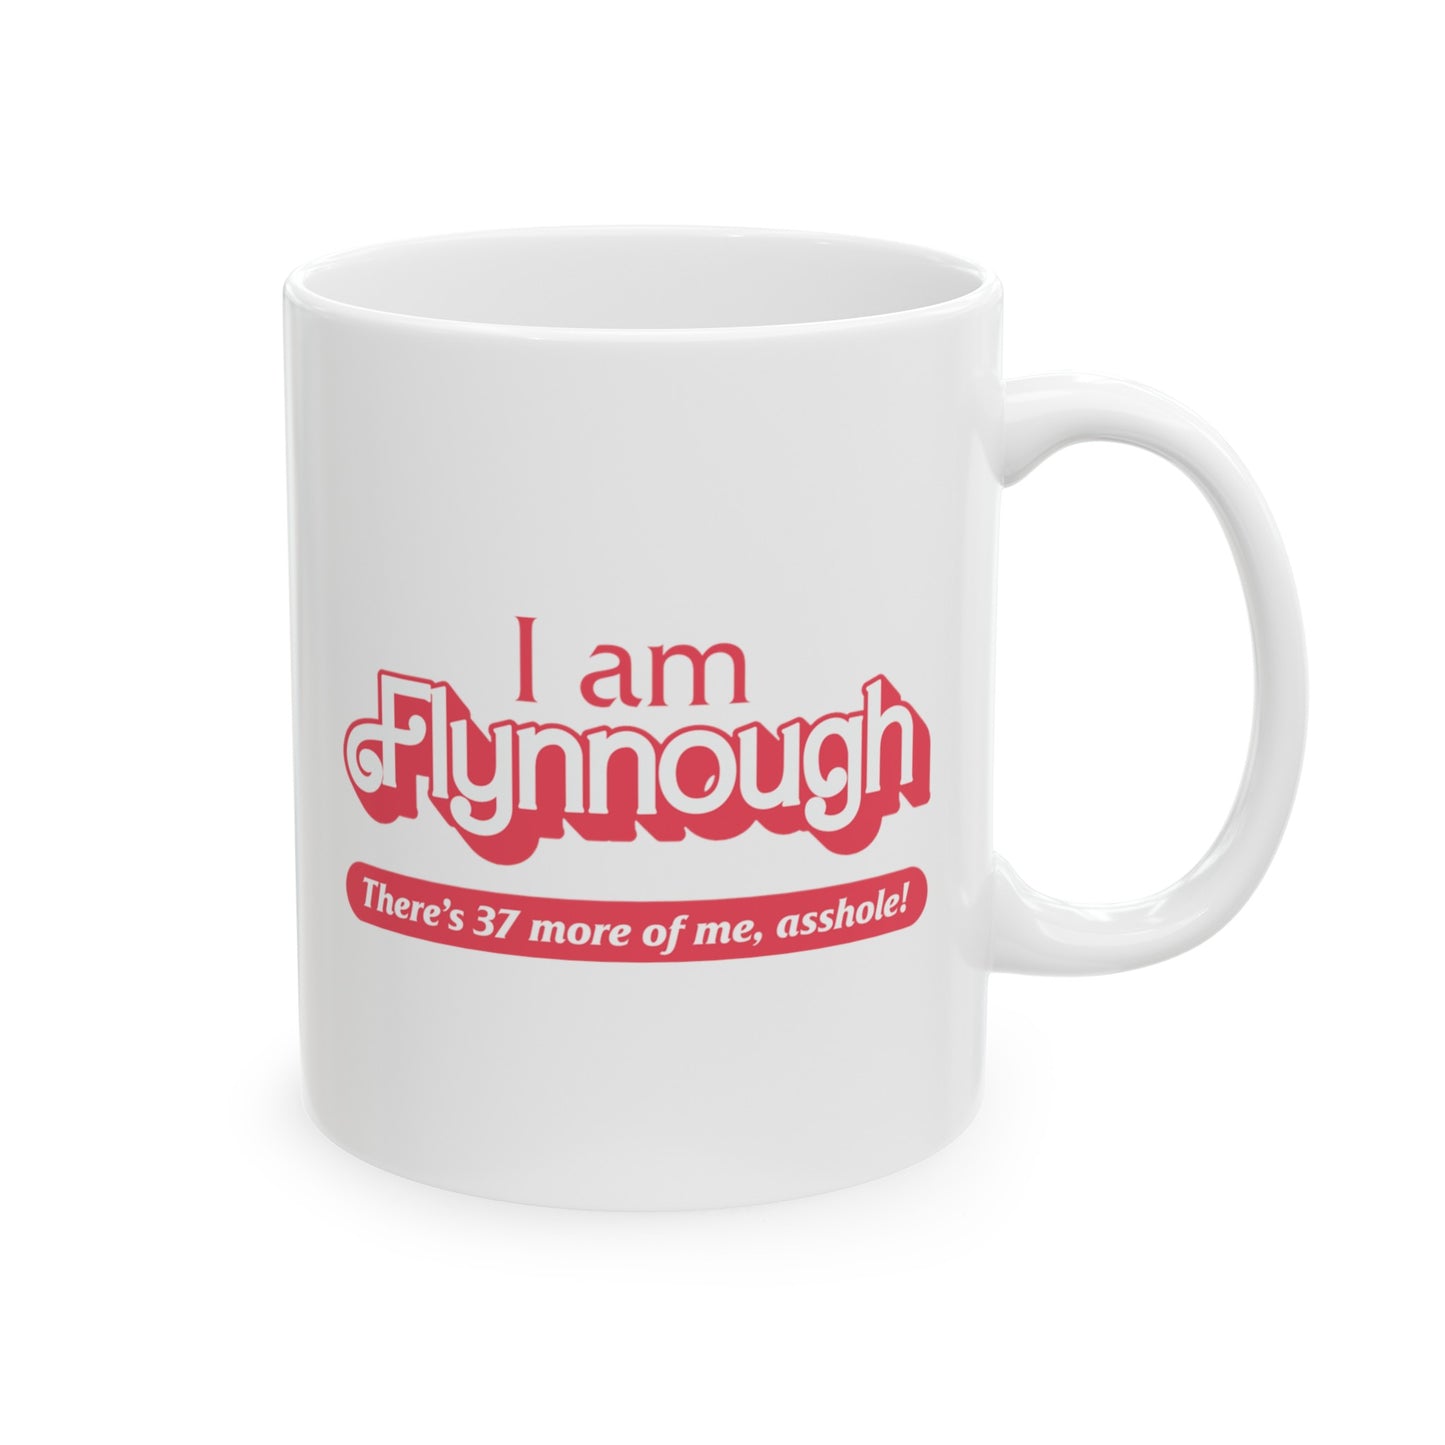 I am Flynnough - Ceramic Mug (11oz)